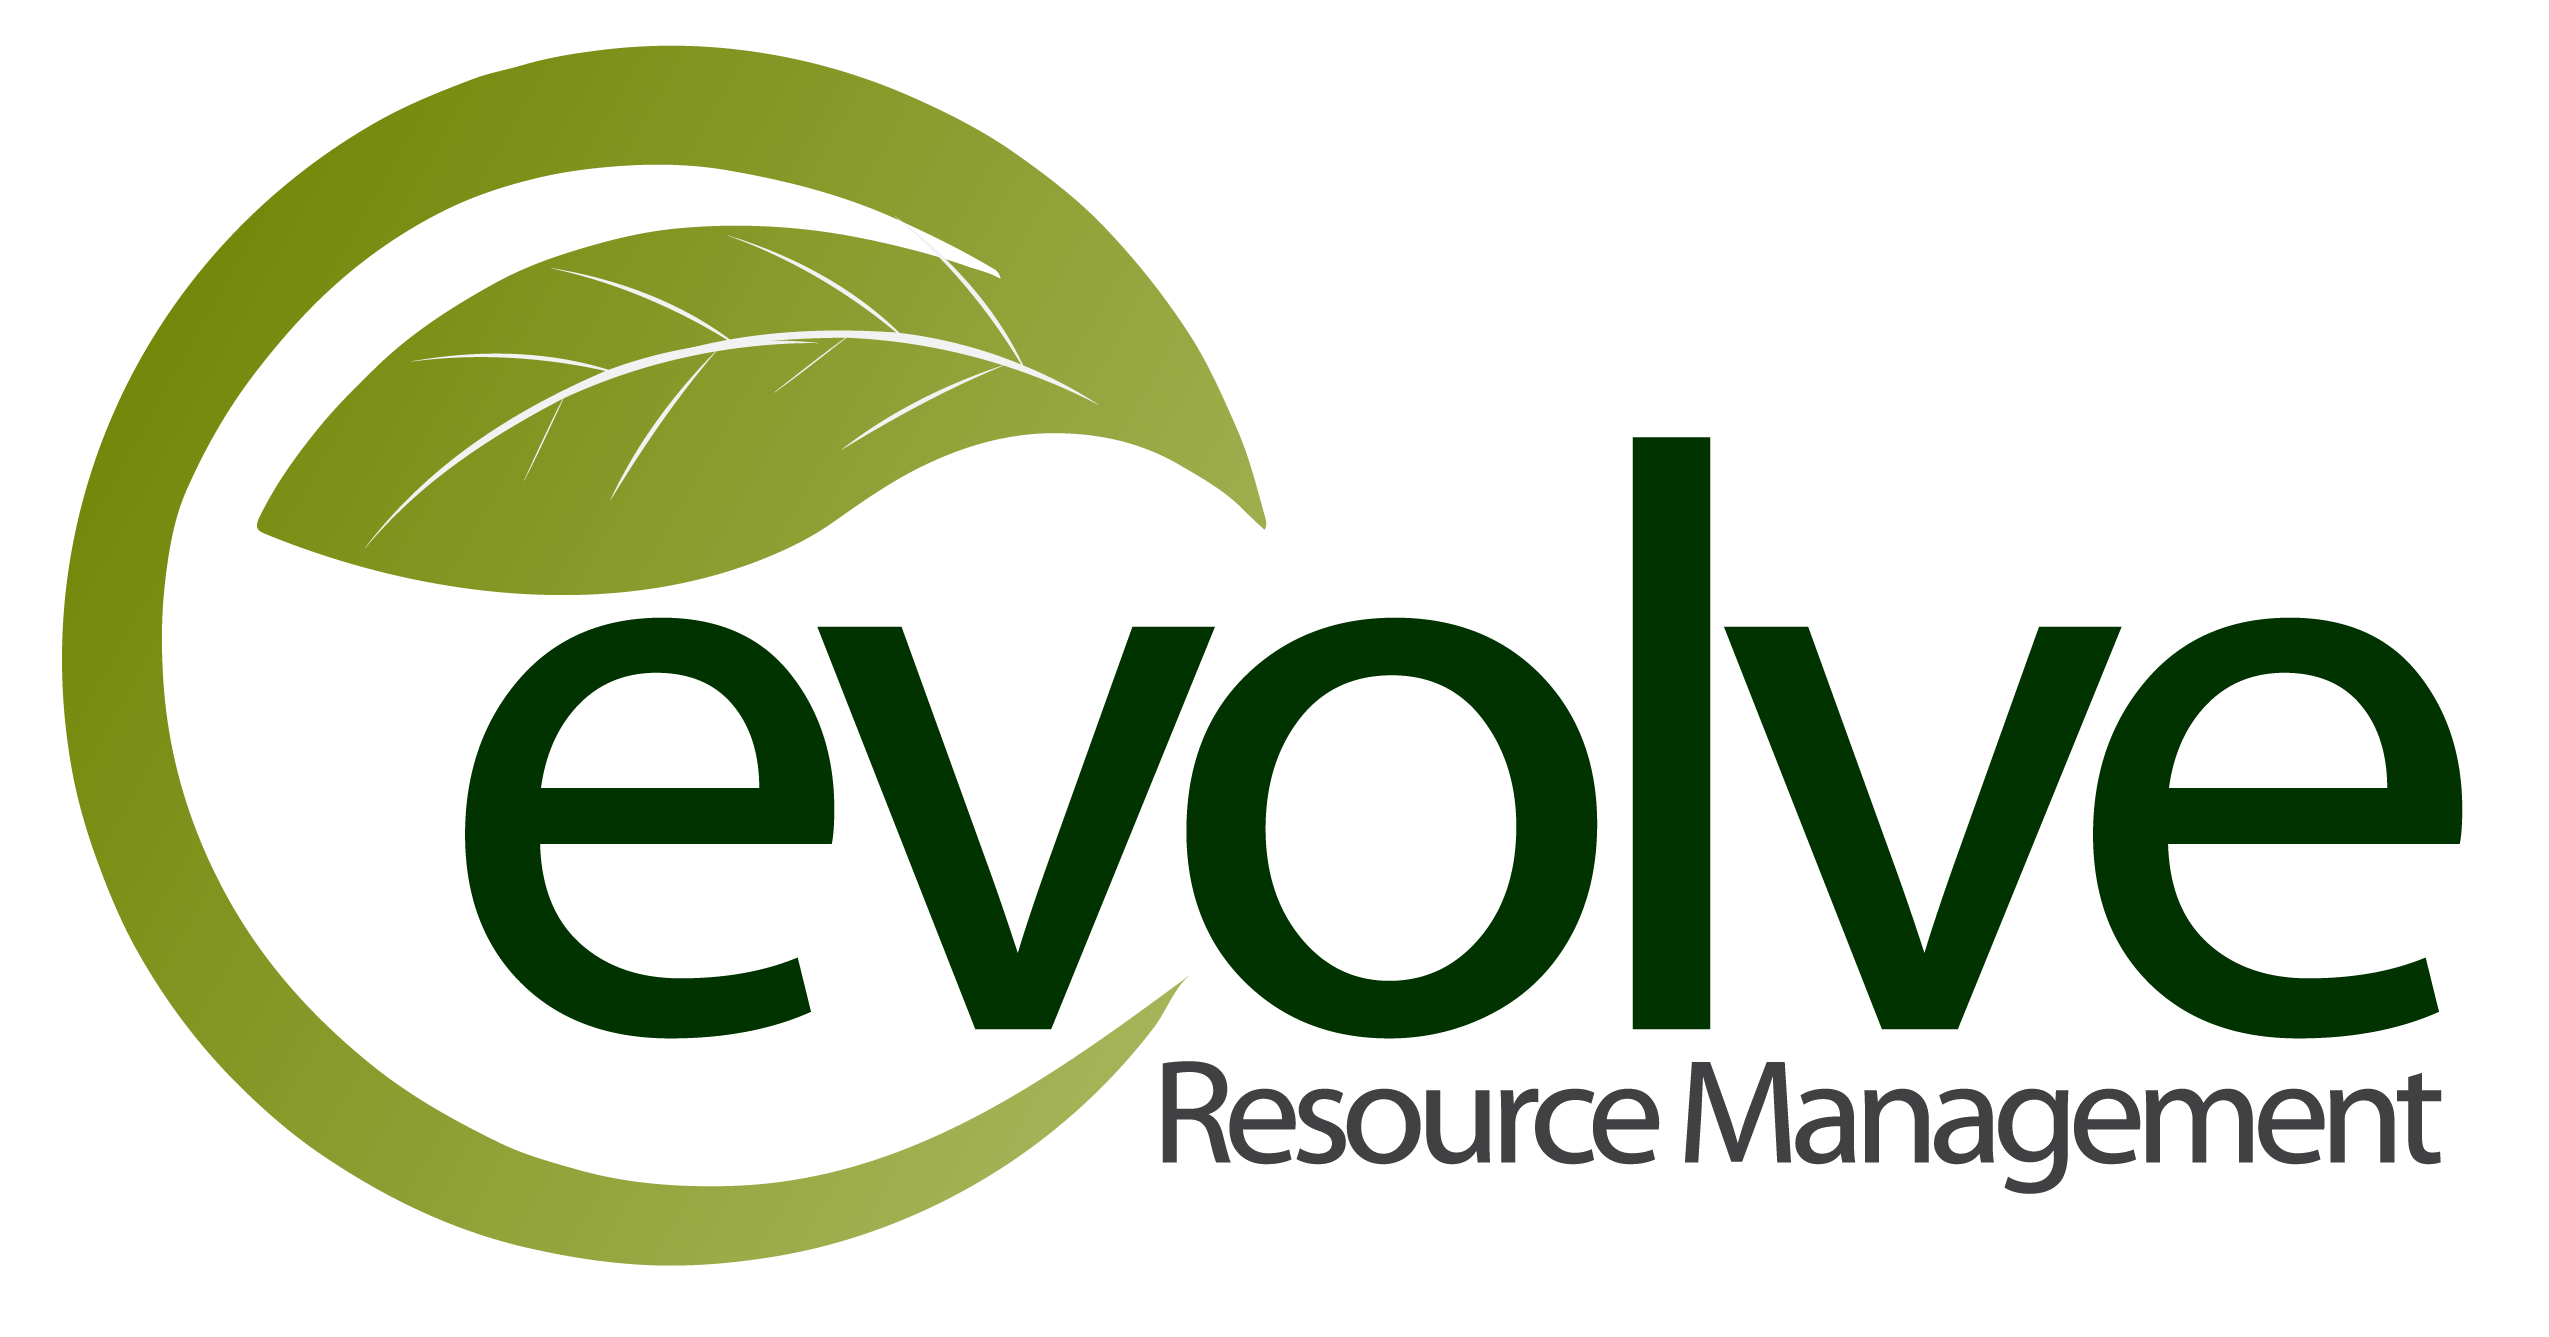 Evolve Resource Management